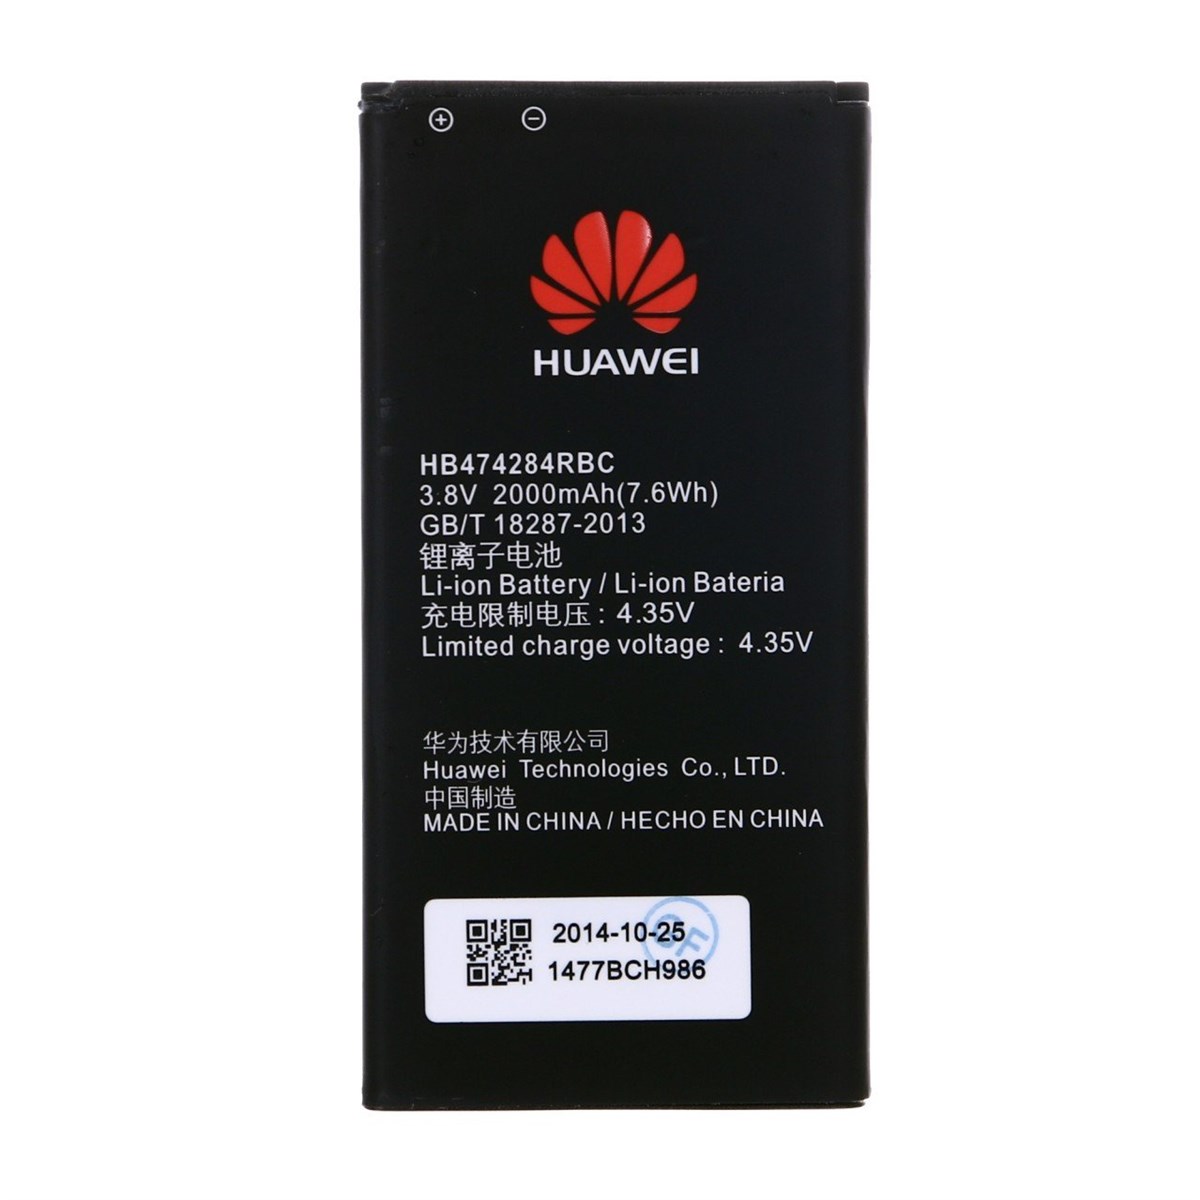 Huawei G301 Batarya Pil Hb474284rbc - tekyerdenal.com